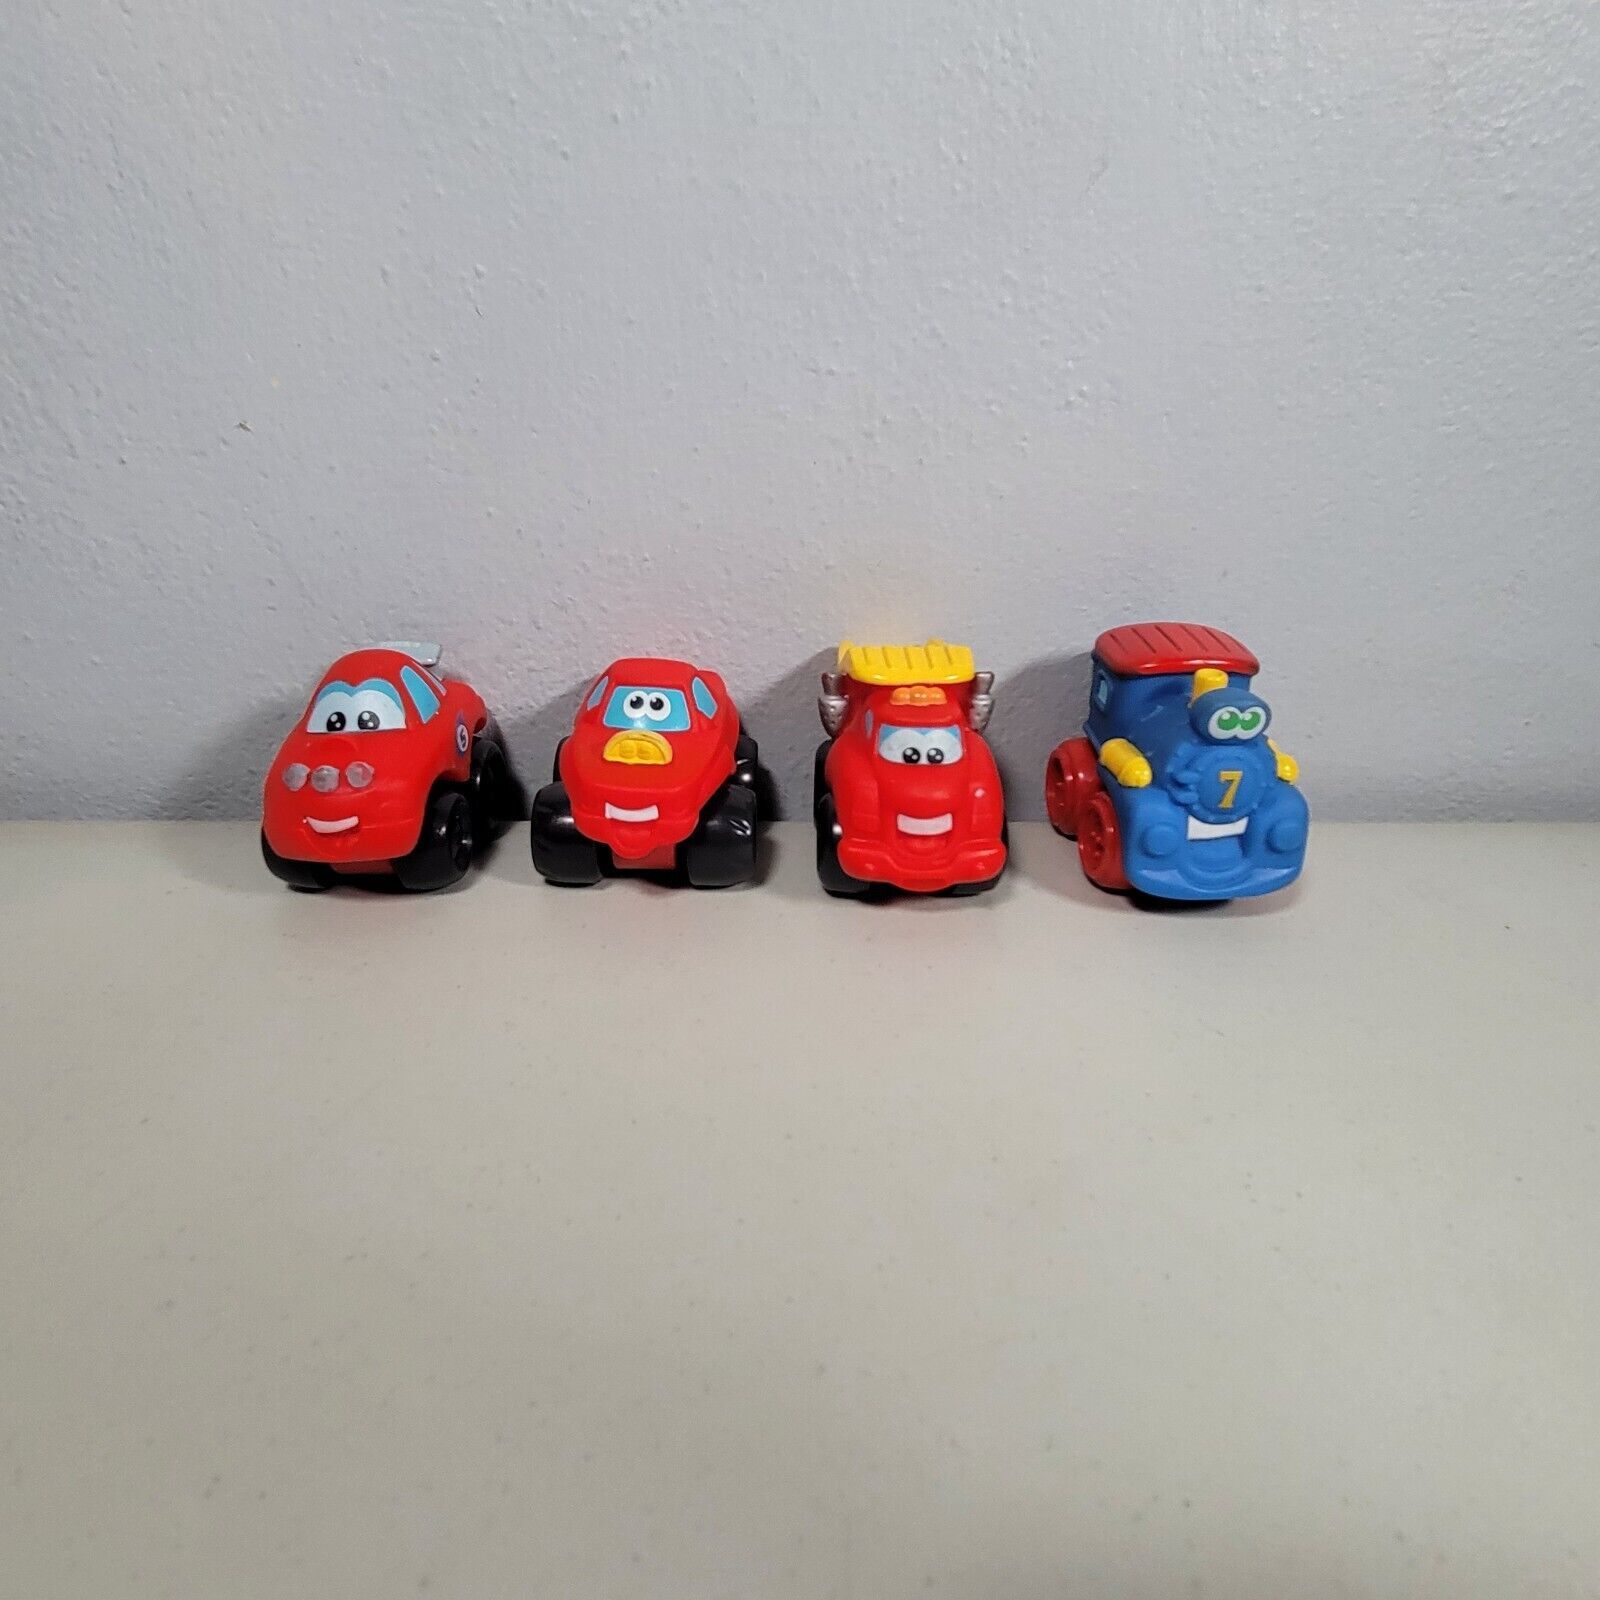 Tonka Hasbro Chuck And Friends Toy Cars and Trucks Chunky Soft Plastic Lot Of 4 - $12.66